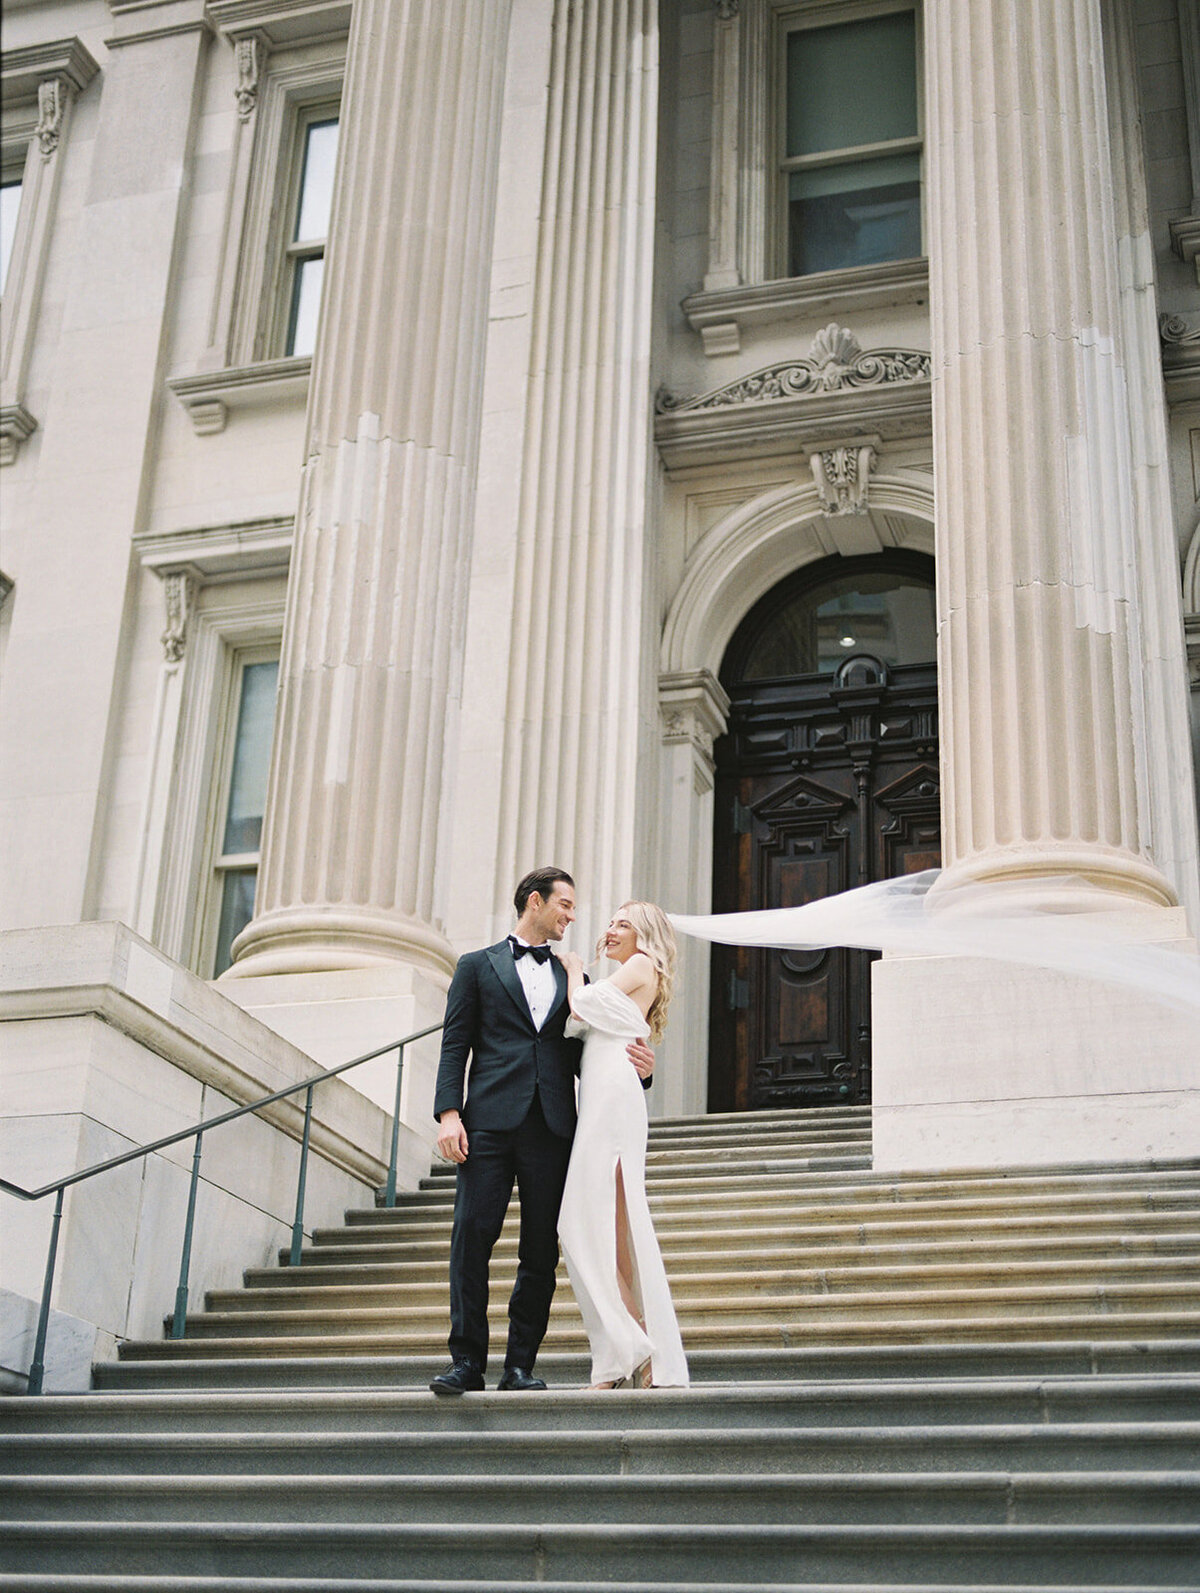 The Plaza Hotel - New York City - Elopement Wedding - Stephanie Michelle Photography - _stephaniemichellephotog - 0-R1-E010